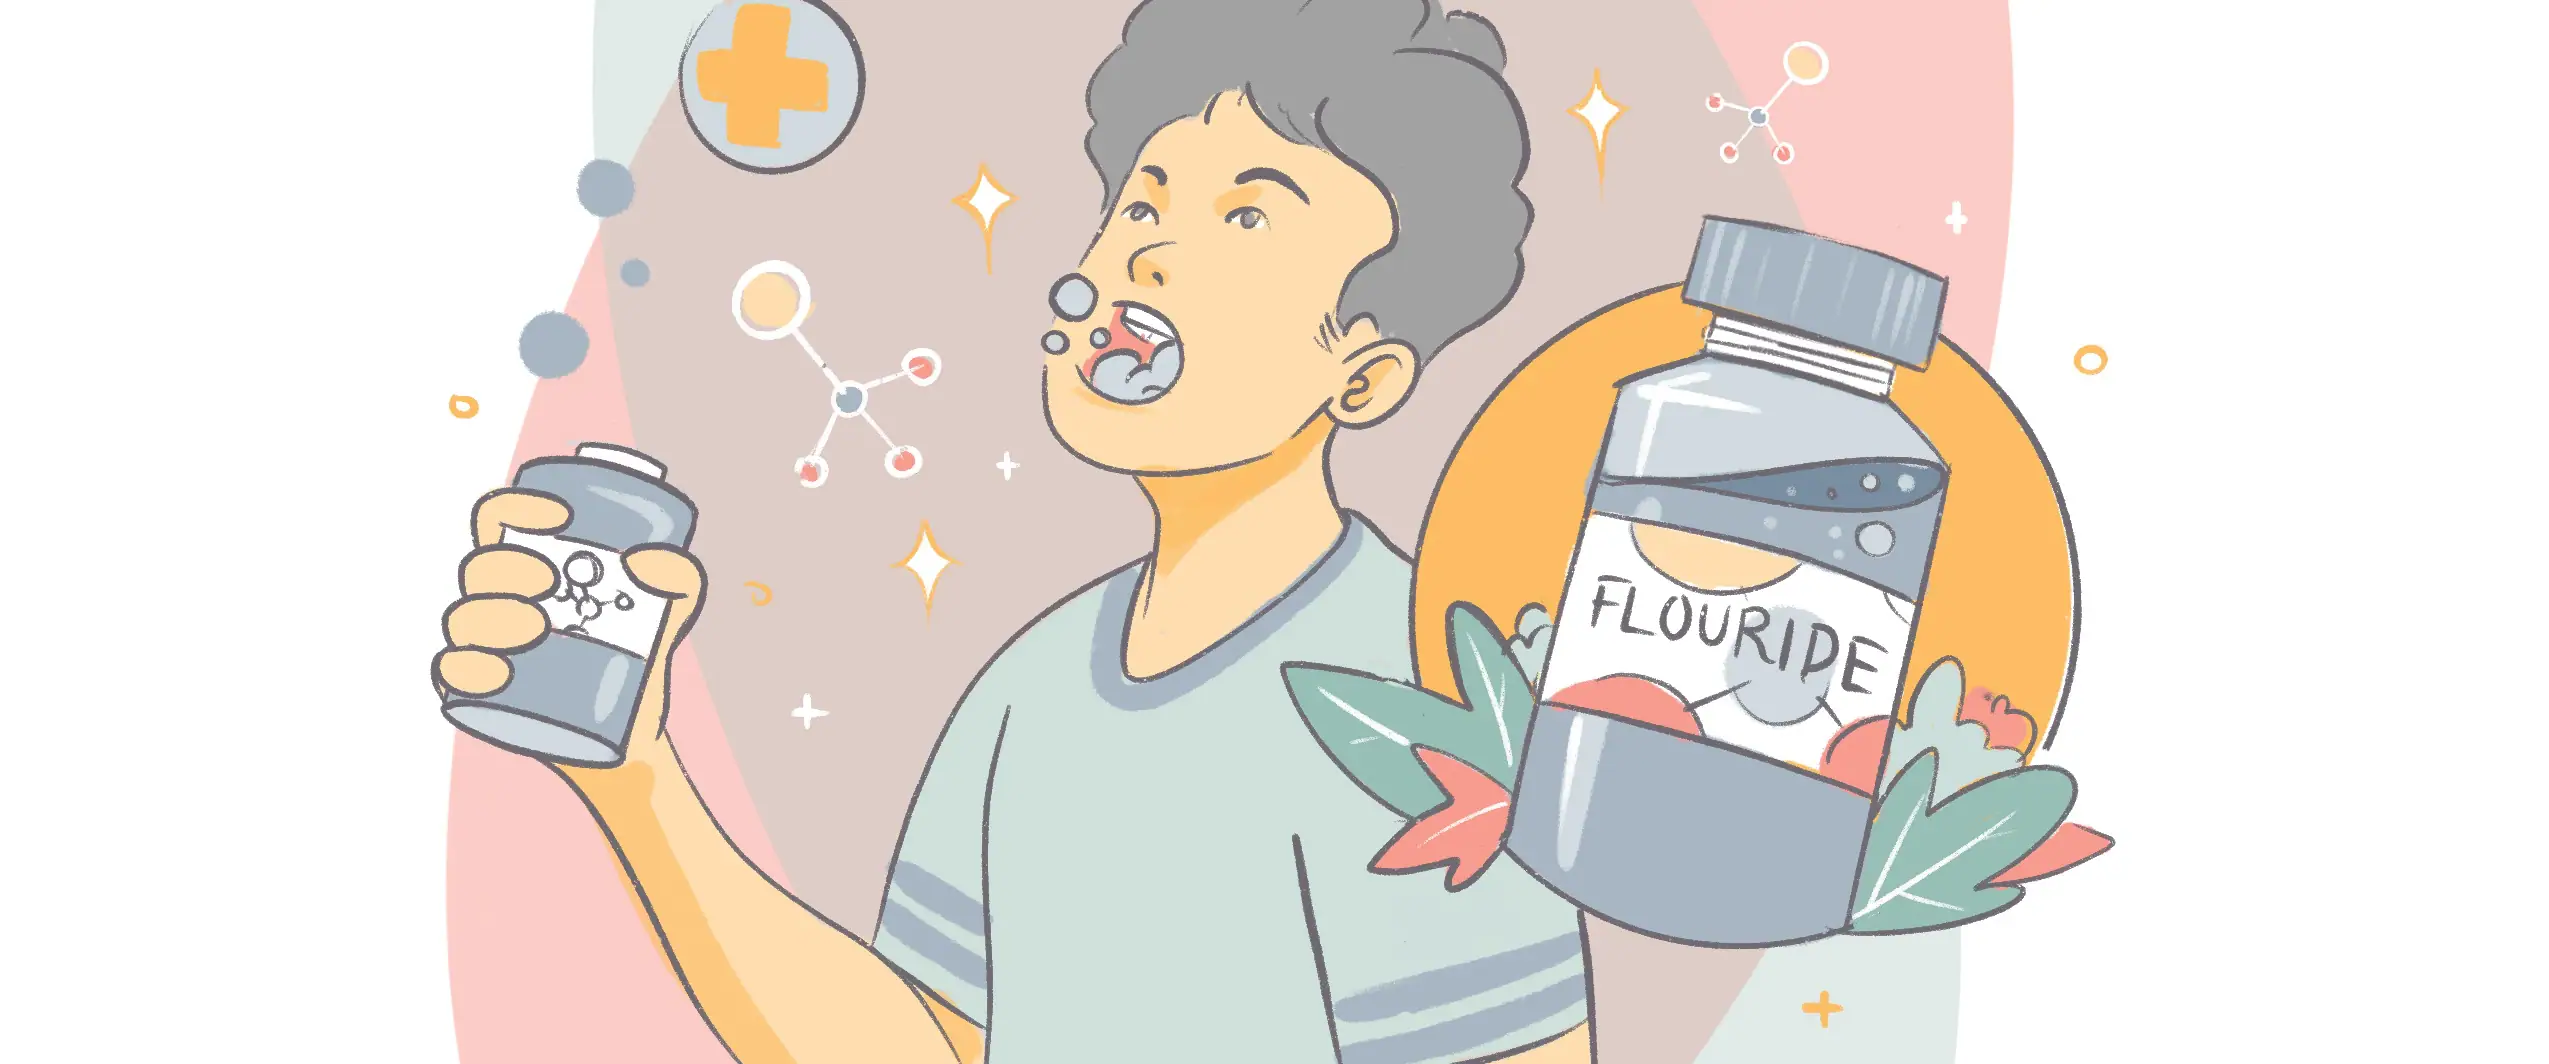 Fluoride treatment